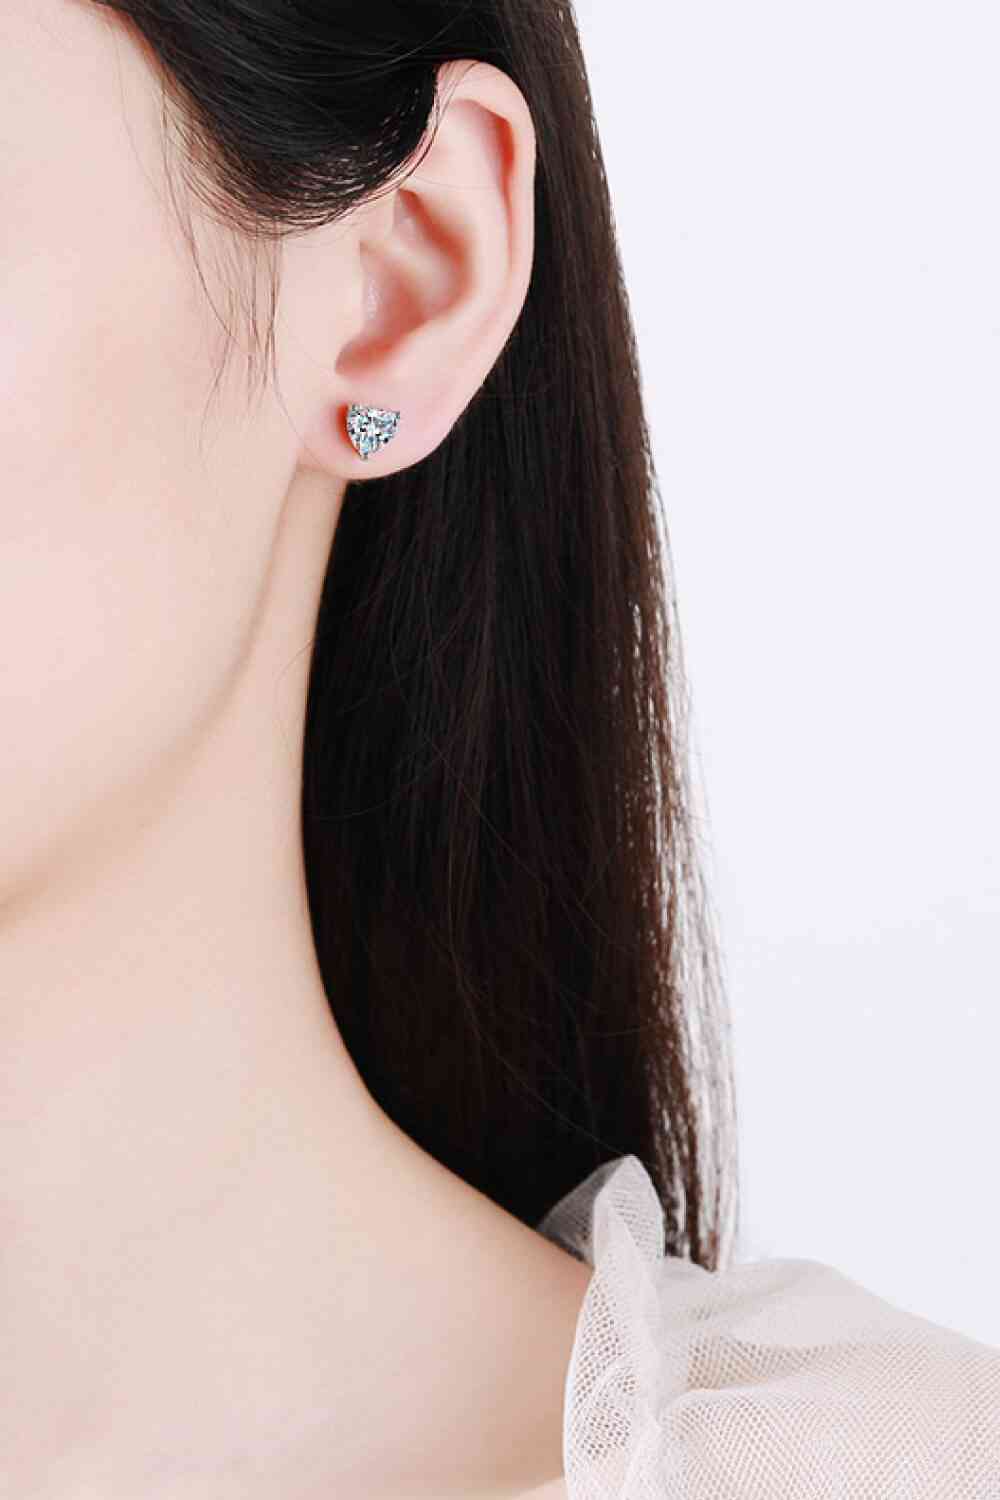 2 Carat Moissanite Heart-Shaped Stud Earrings - BEYOND